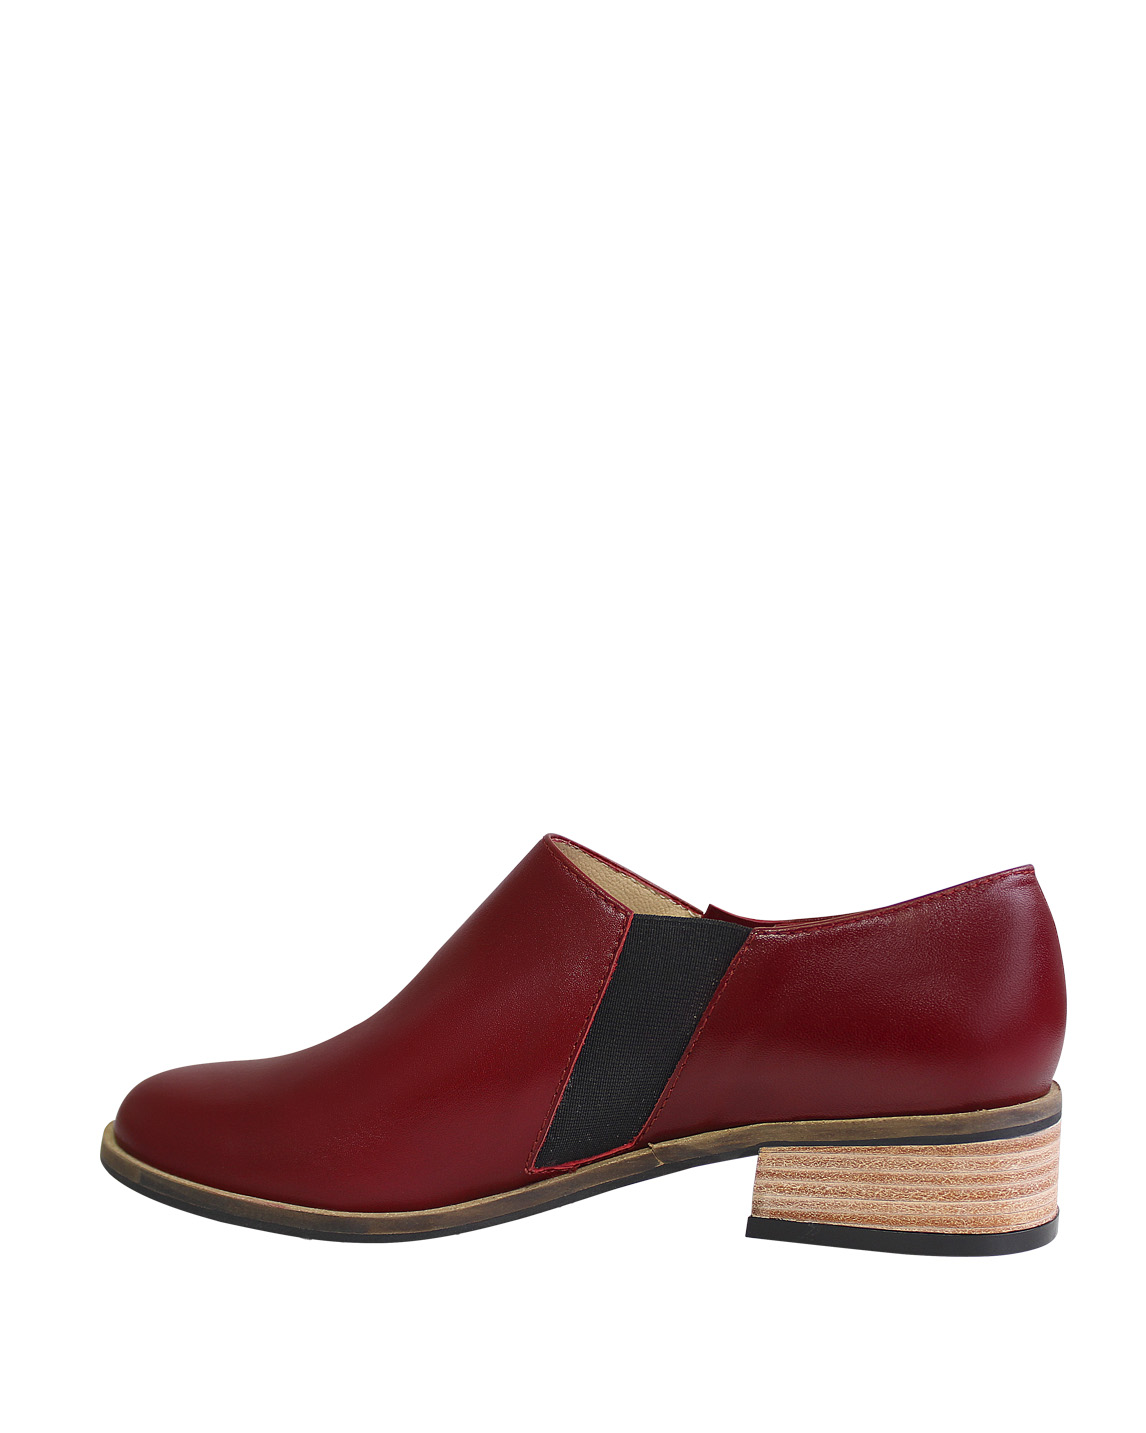 Zapato Derby FD-9268 Color Rojo